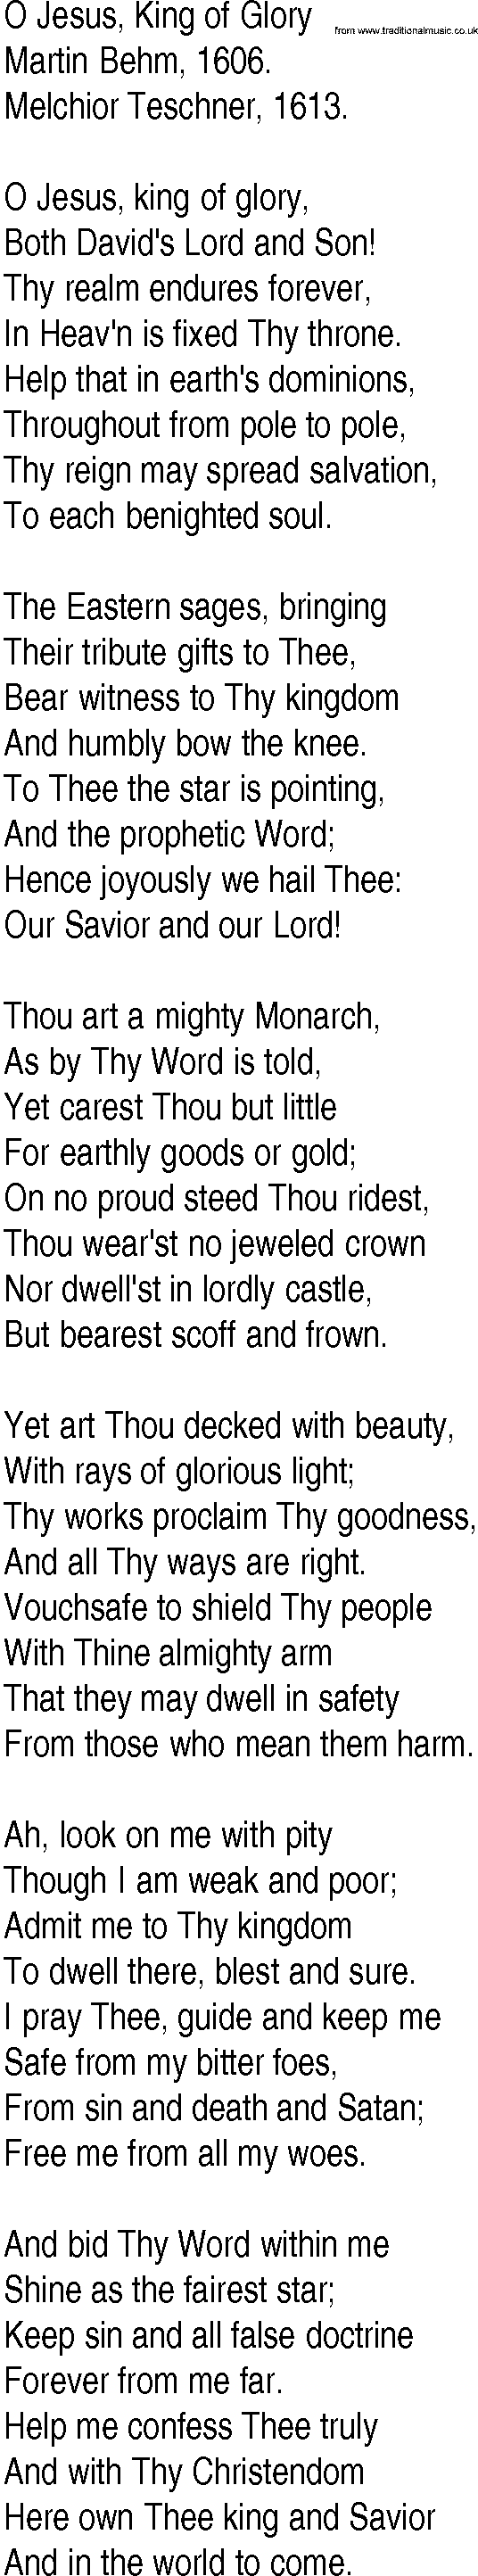 Hymn and Gospel Song: O Jesus, King of Glory by Martin Behm lyrics